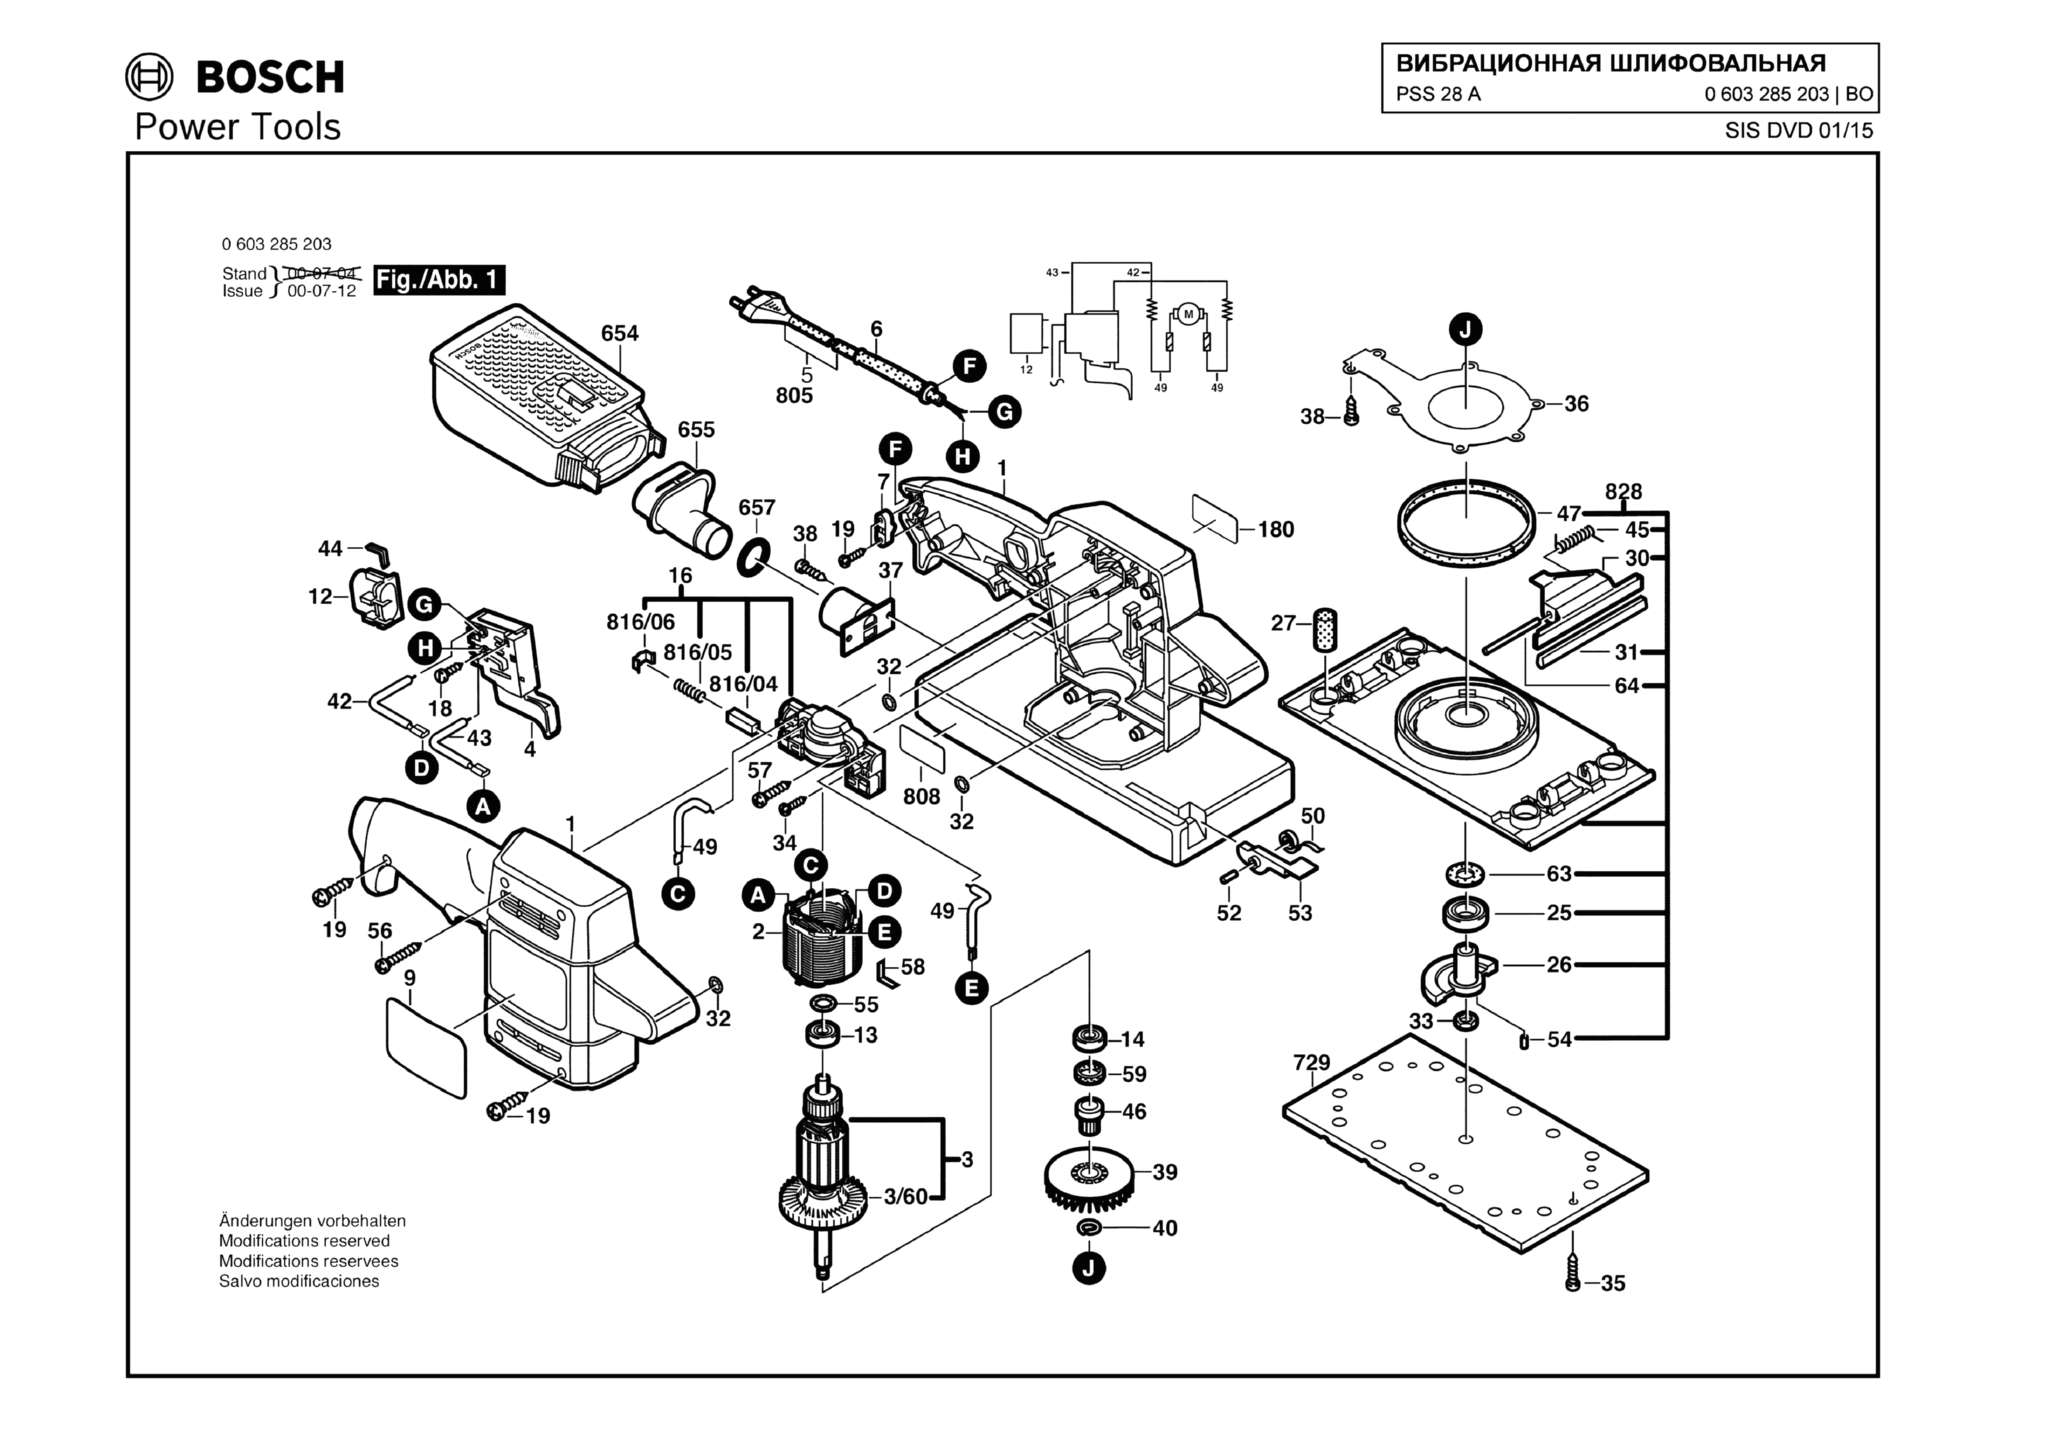 Запчасти, схема и деталировка Bosch PSS 28 A (ТИП 0603285203)